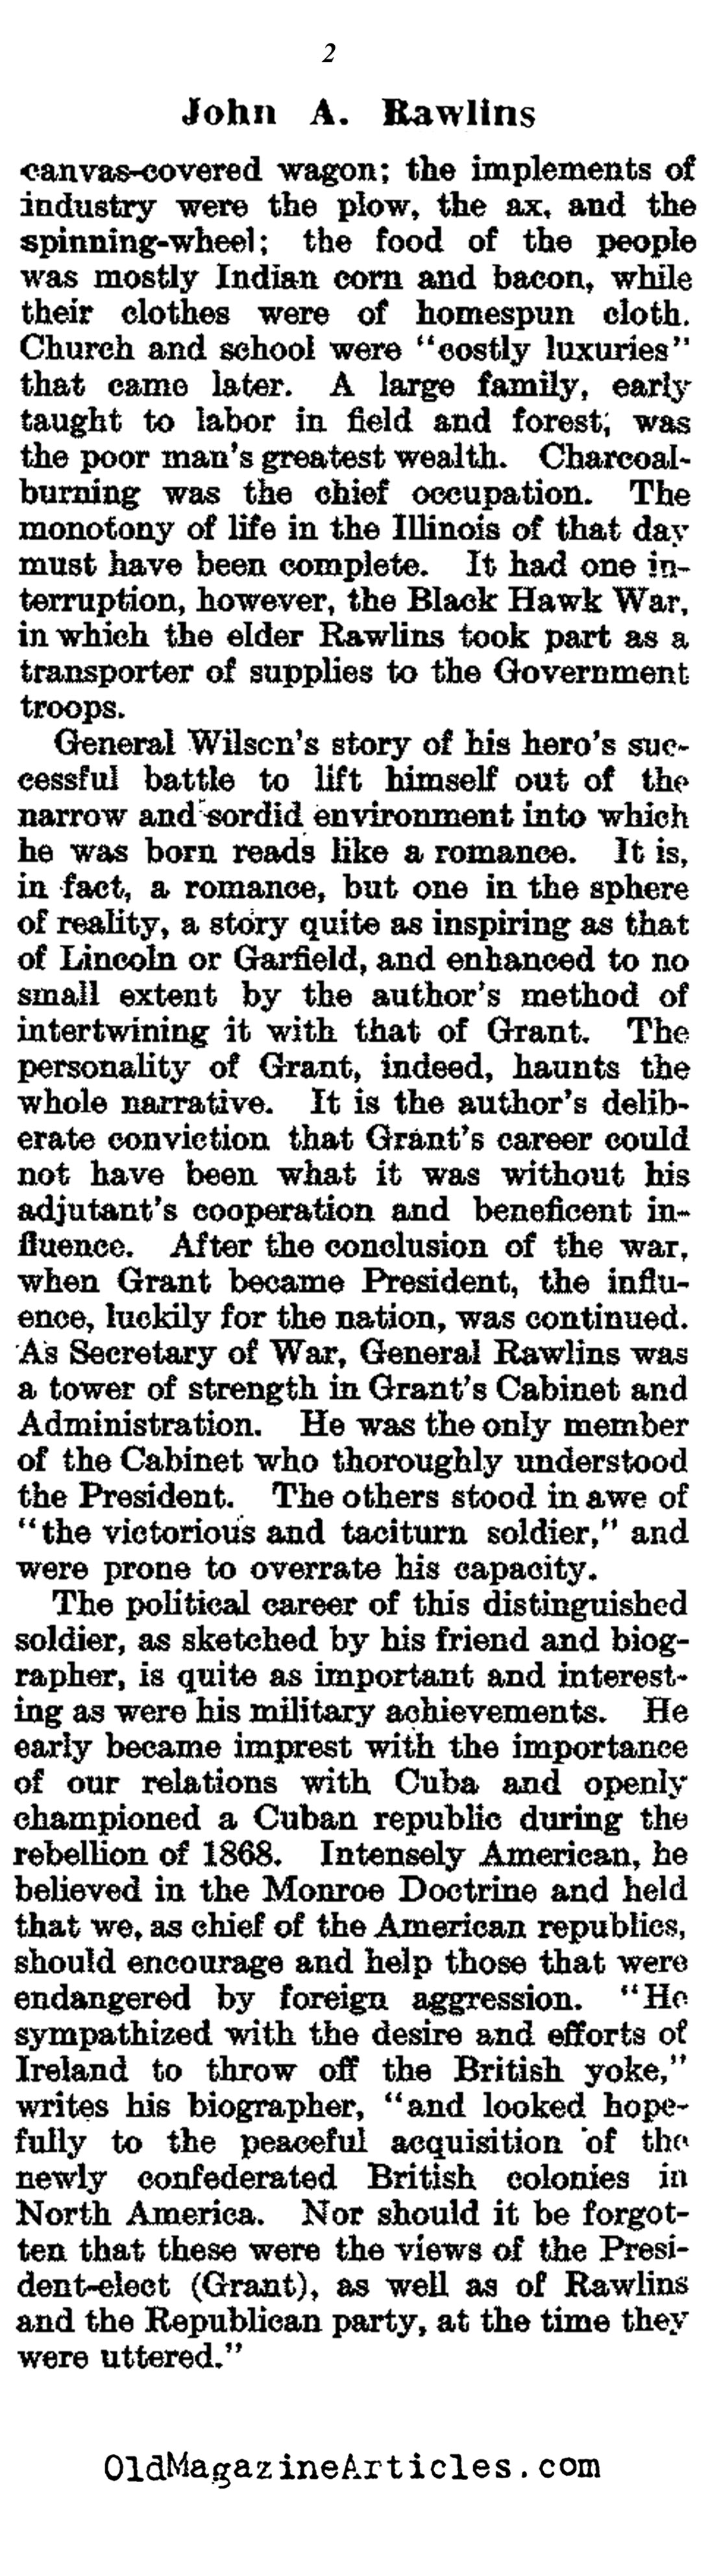 General John Rawlins: General Grant's Chief of Staff   (The Literary Digest, 1917)